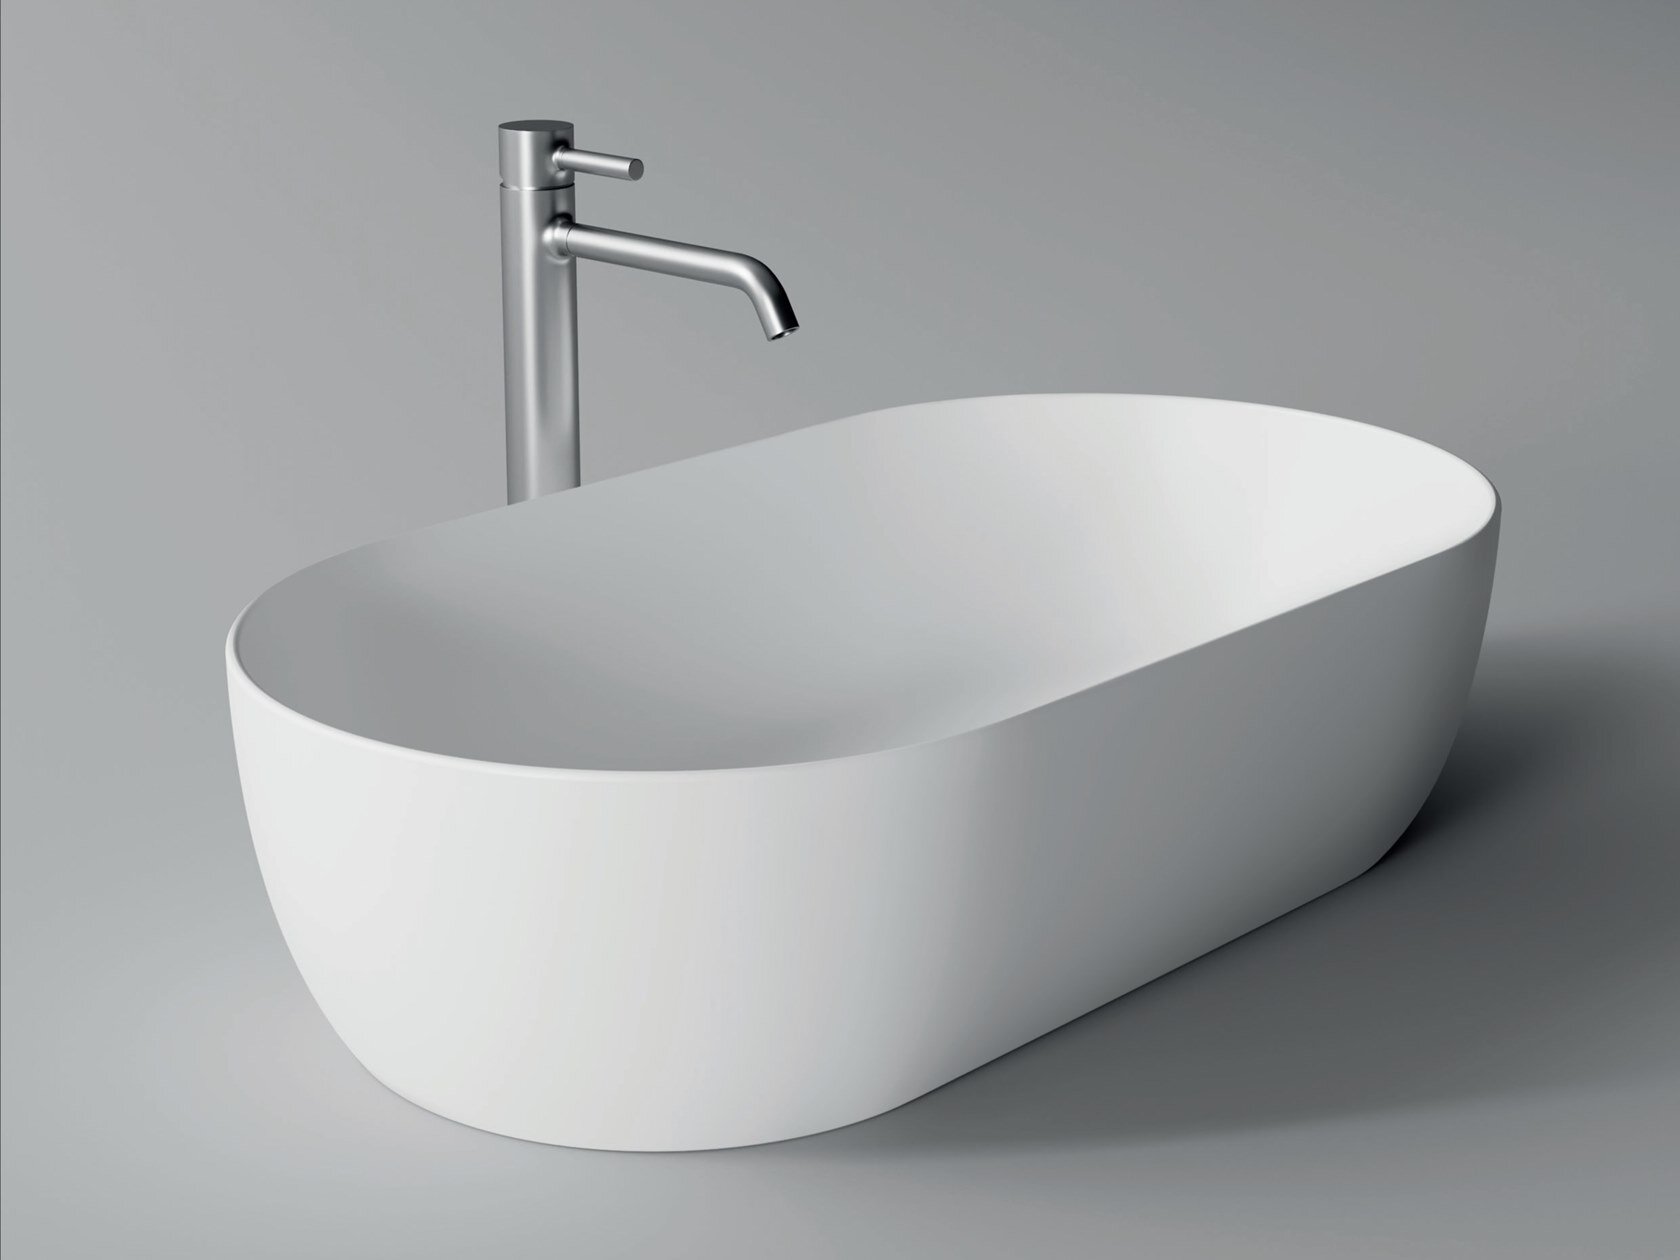 2b_UNICA-Oval-washbasin-Alice-Ceramica-365387-rel135c92a2.jpeg